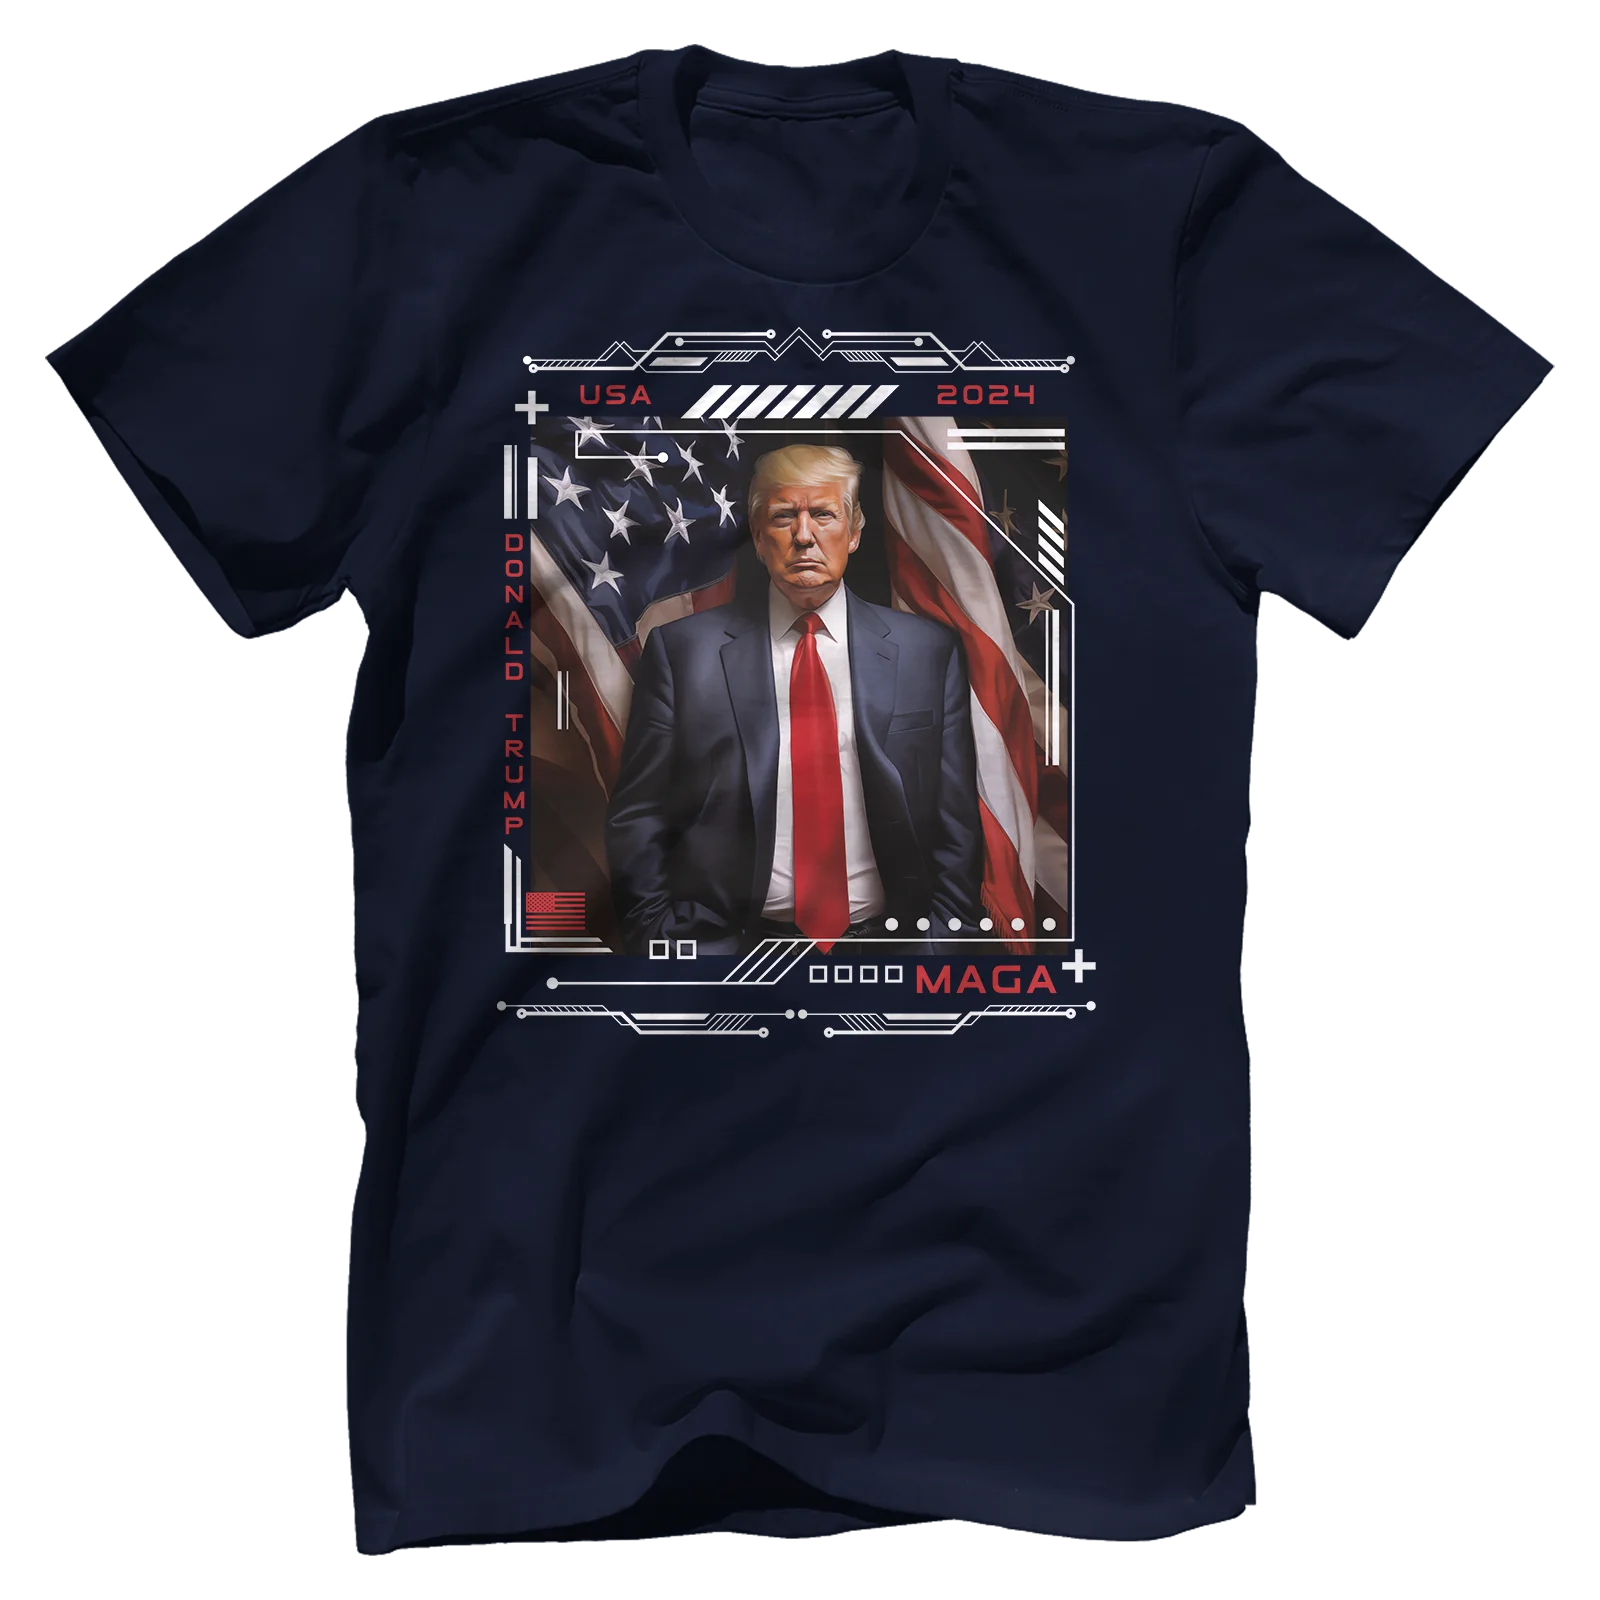 USA Trump 2024 T-shirt - GB02